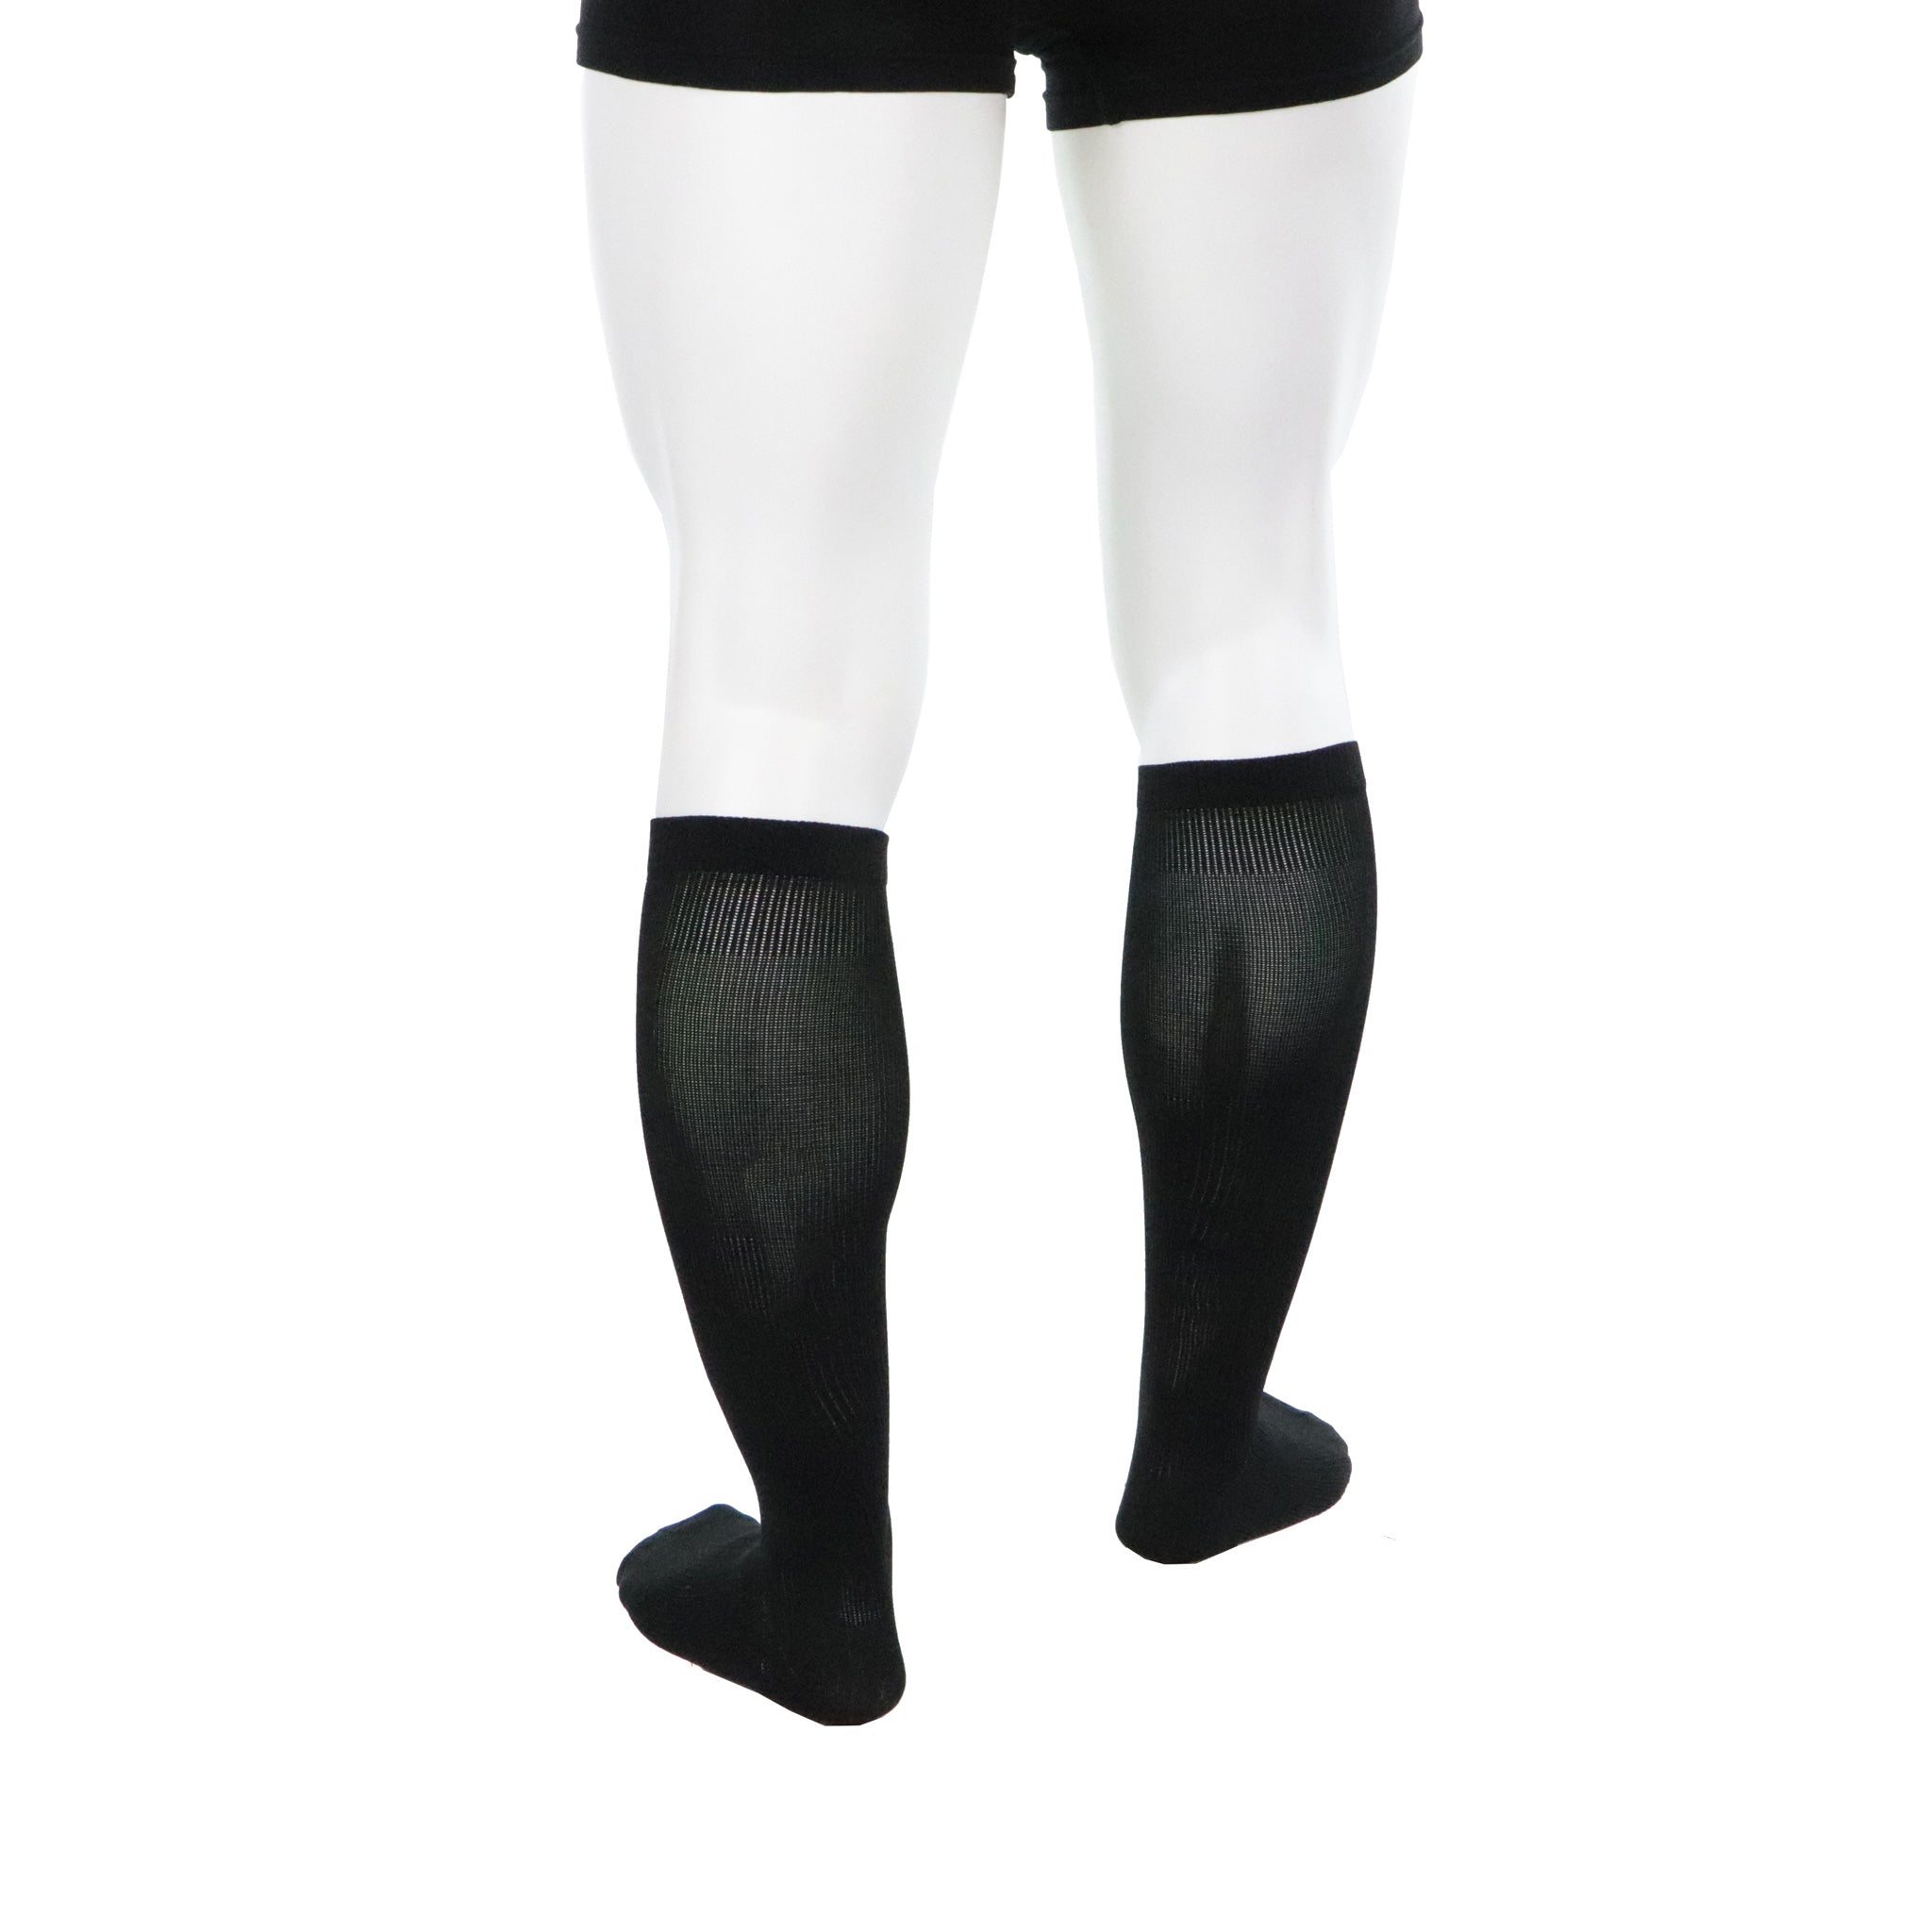 Doctor Brace Actiman 30-40 compression socks knee high black rear view